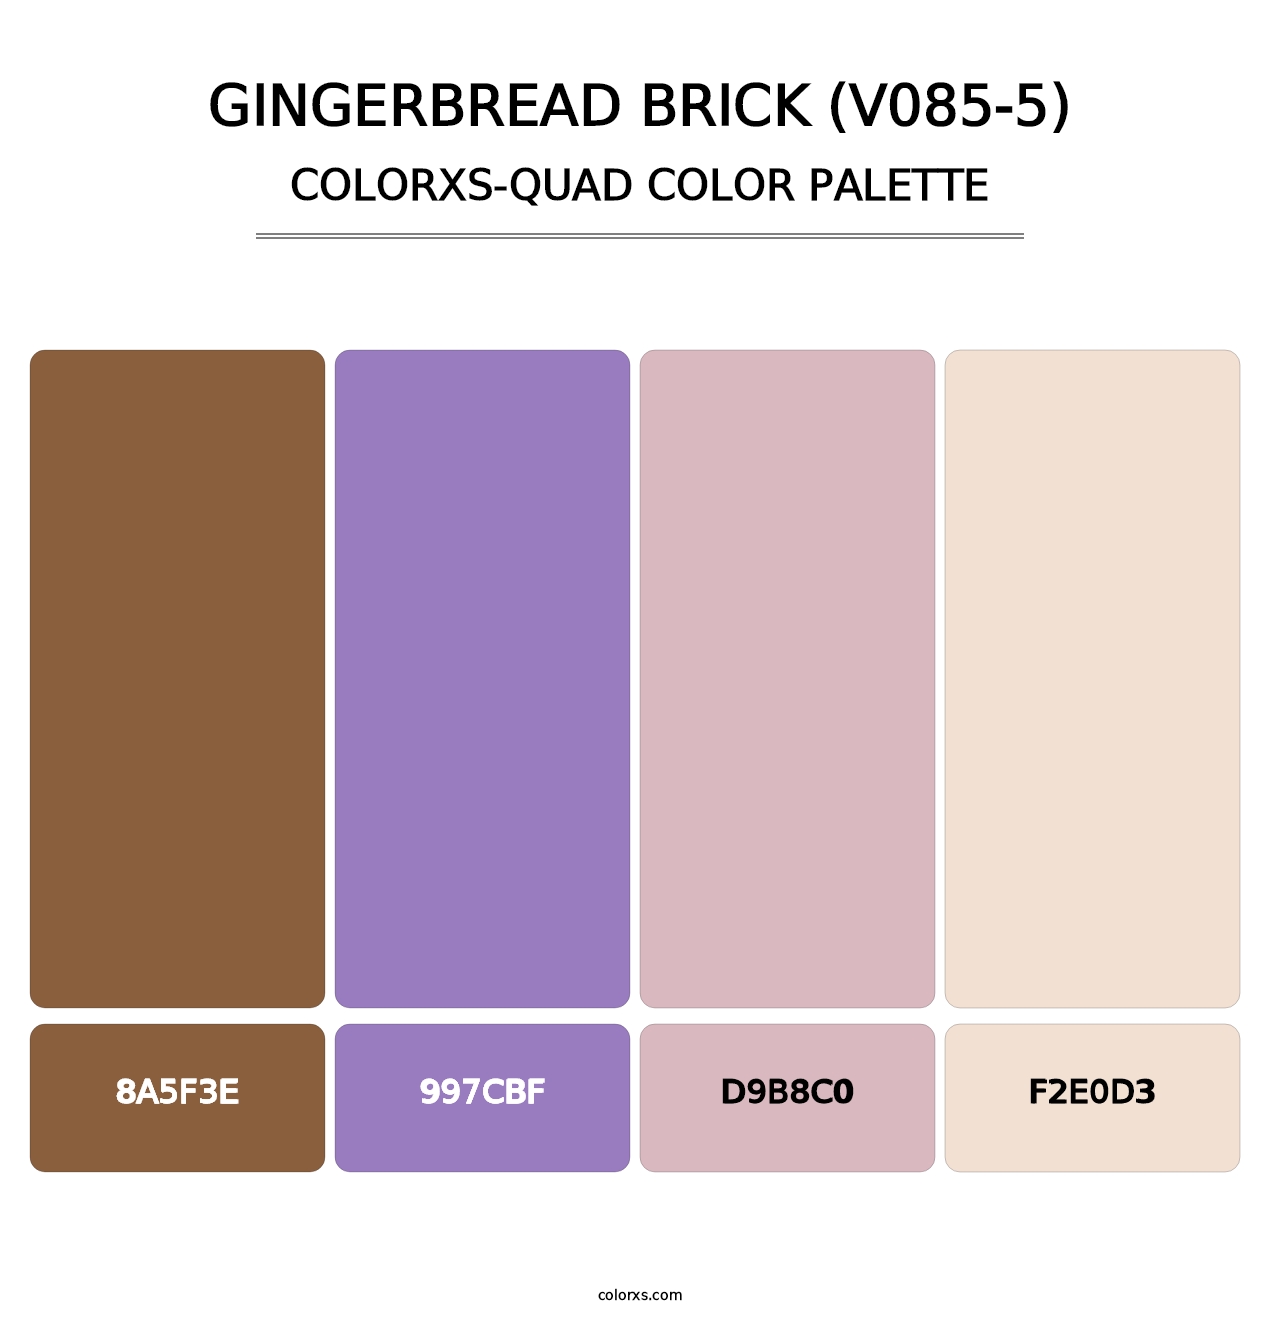 Gingerbread Brick (V085-5) - Colorxs Quad Palette